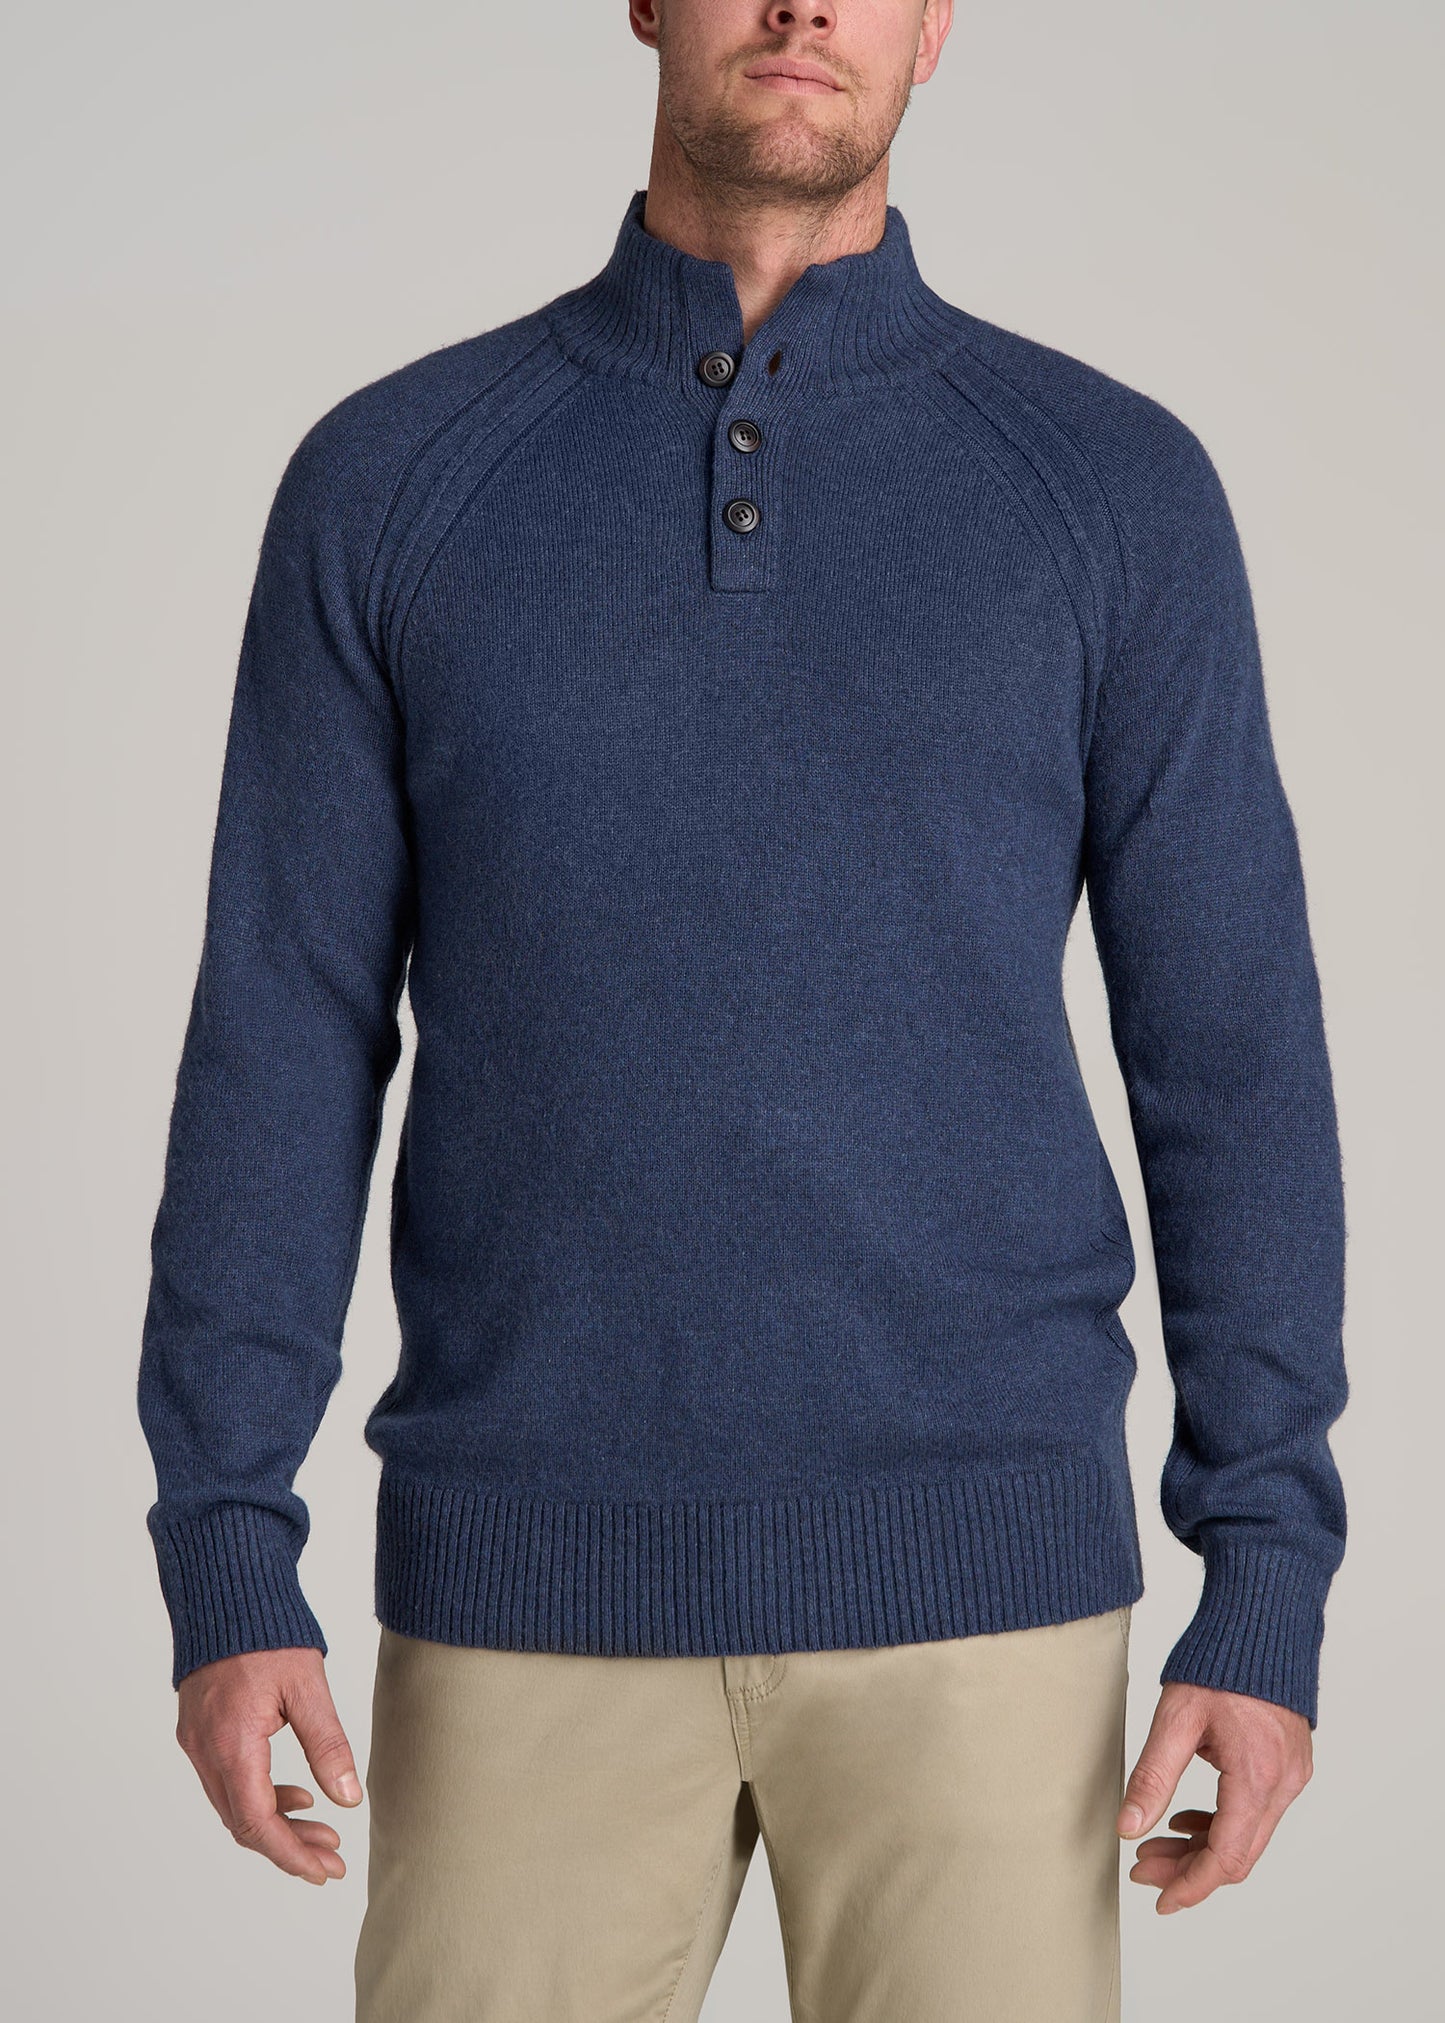 Three Button Mock Neck Tall Men's Sweater | American Tall